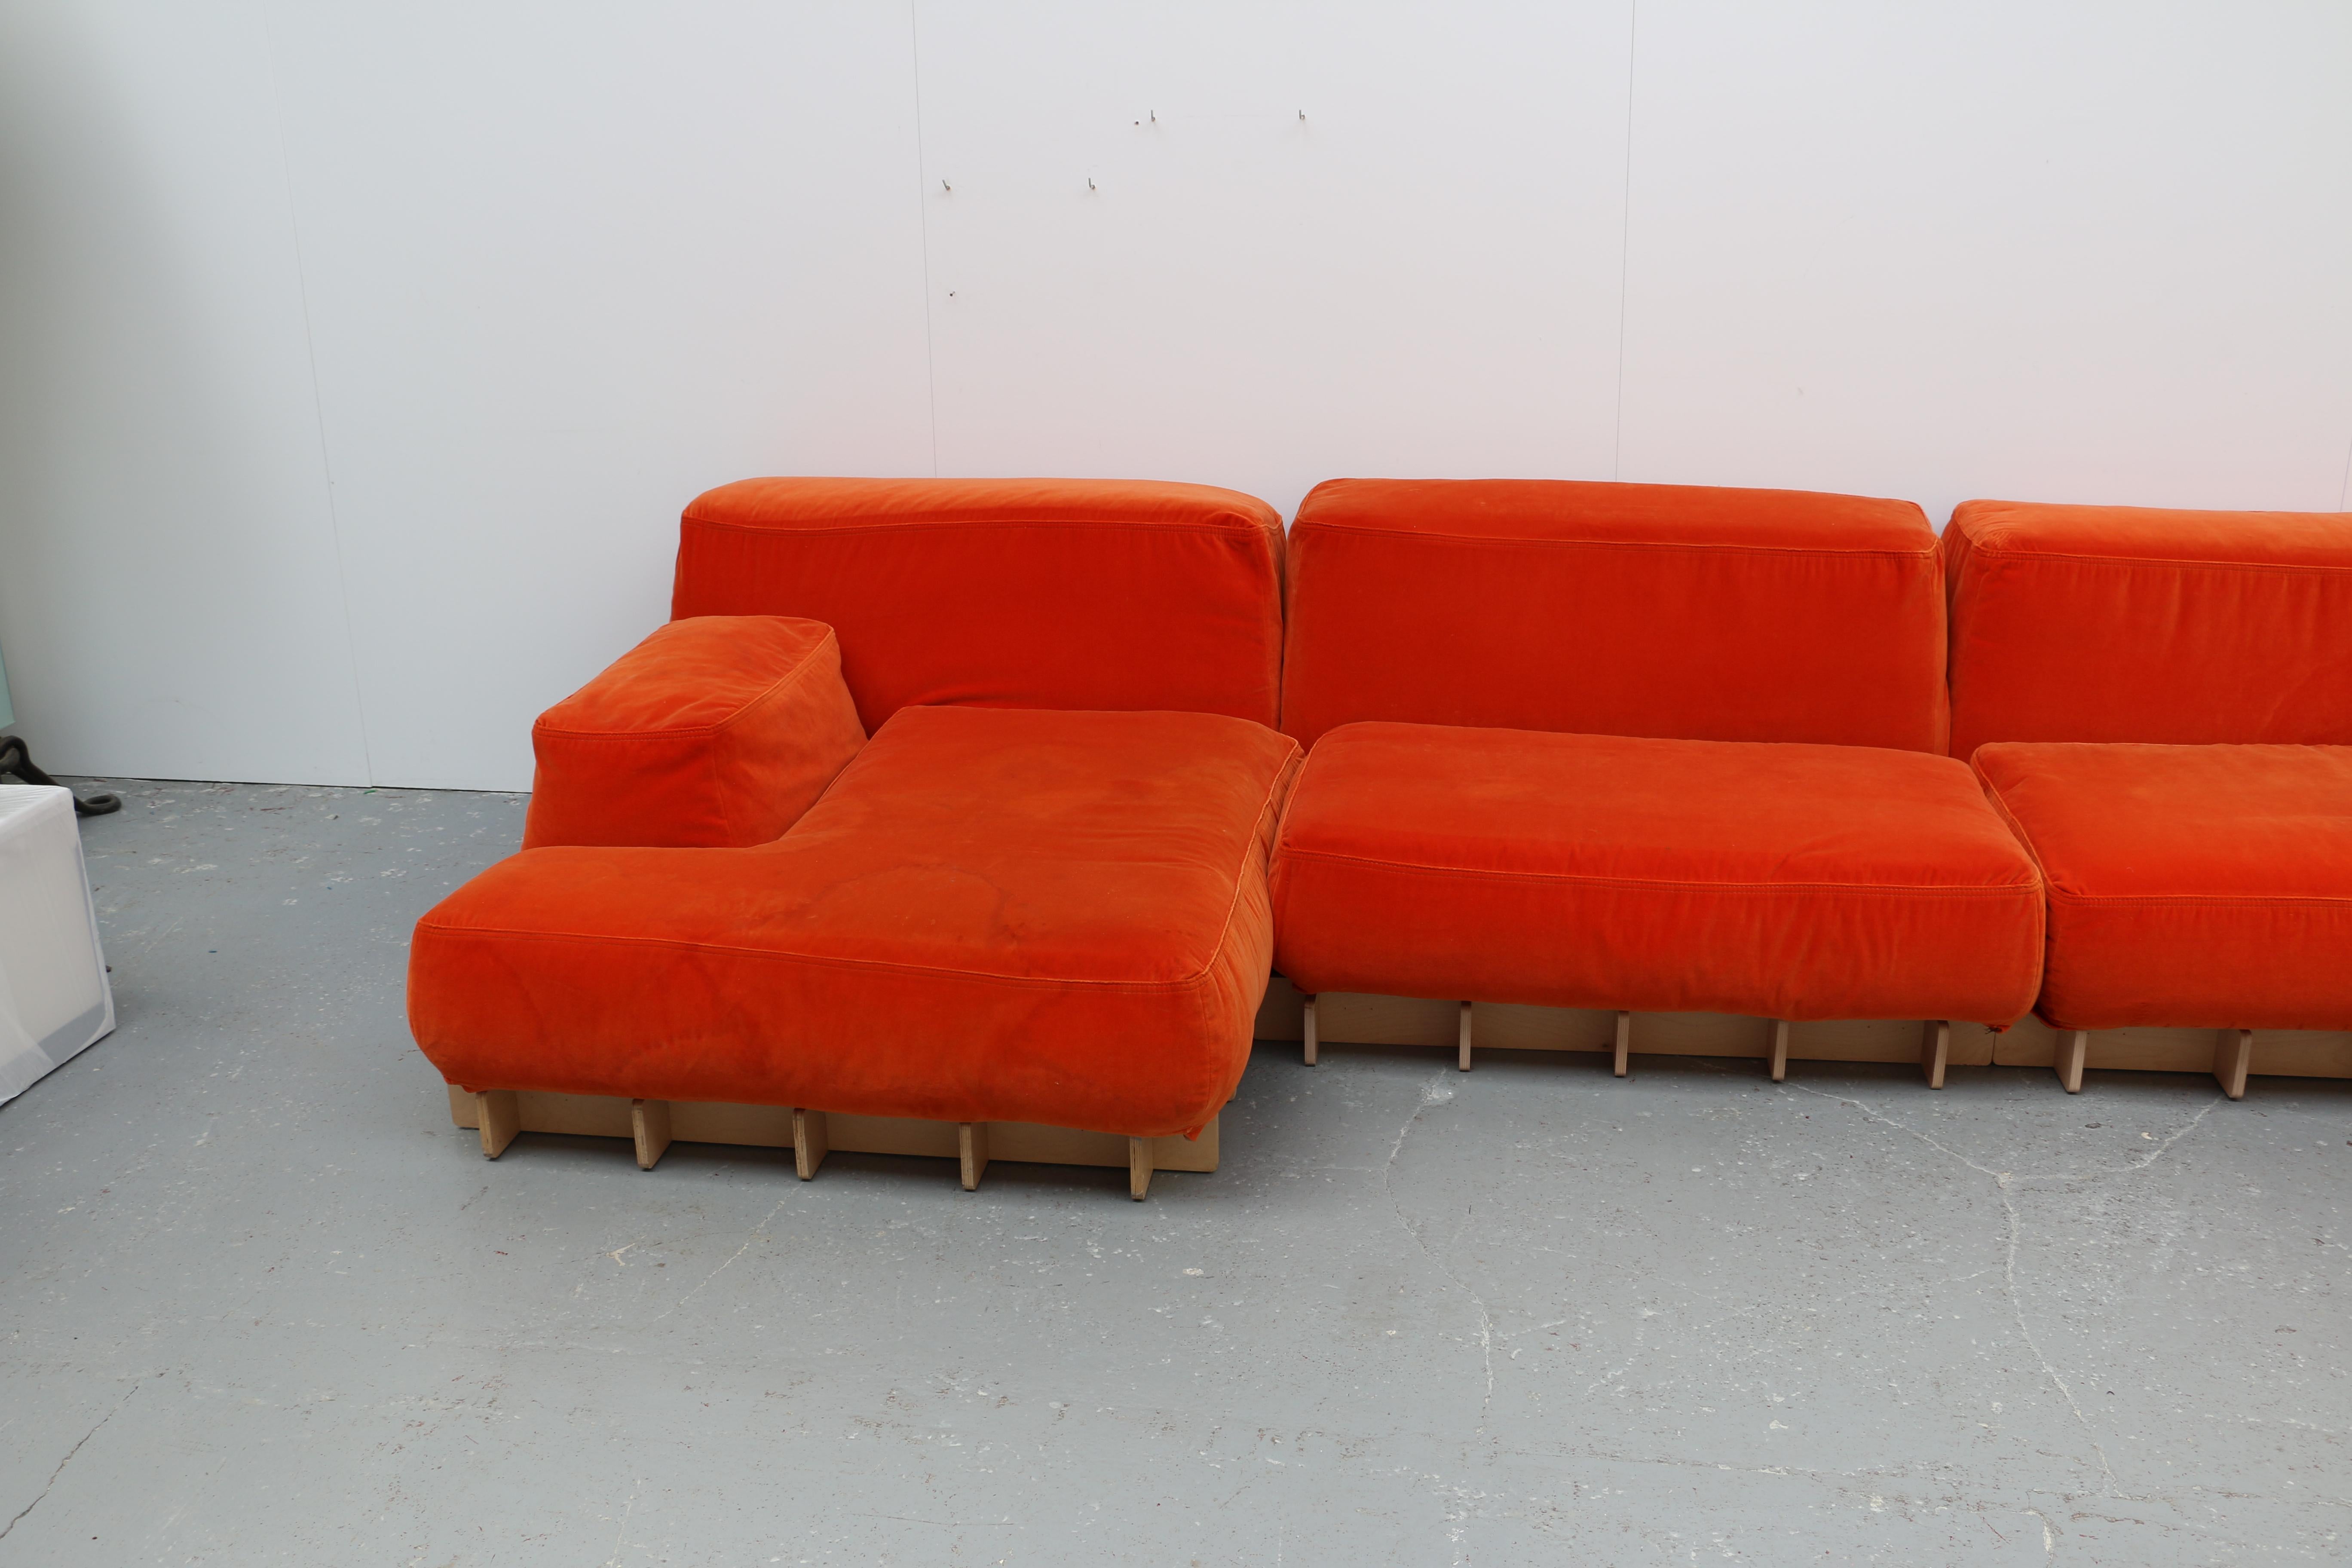 Italian Large Modular Sofa in Orange Velvet, Italy, 2000s For Sale